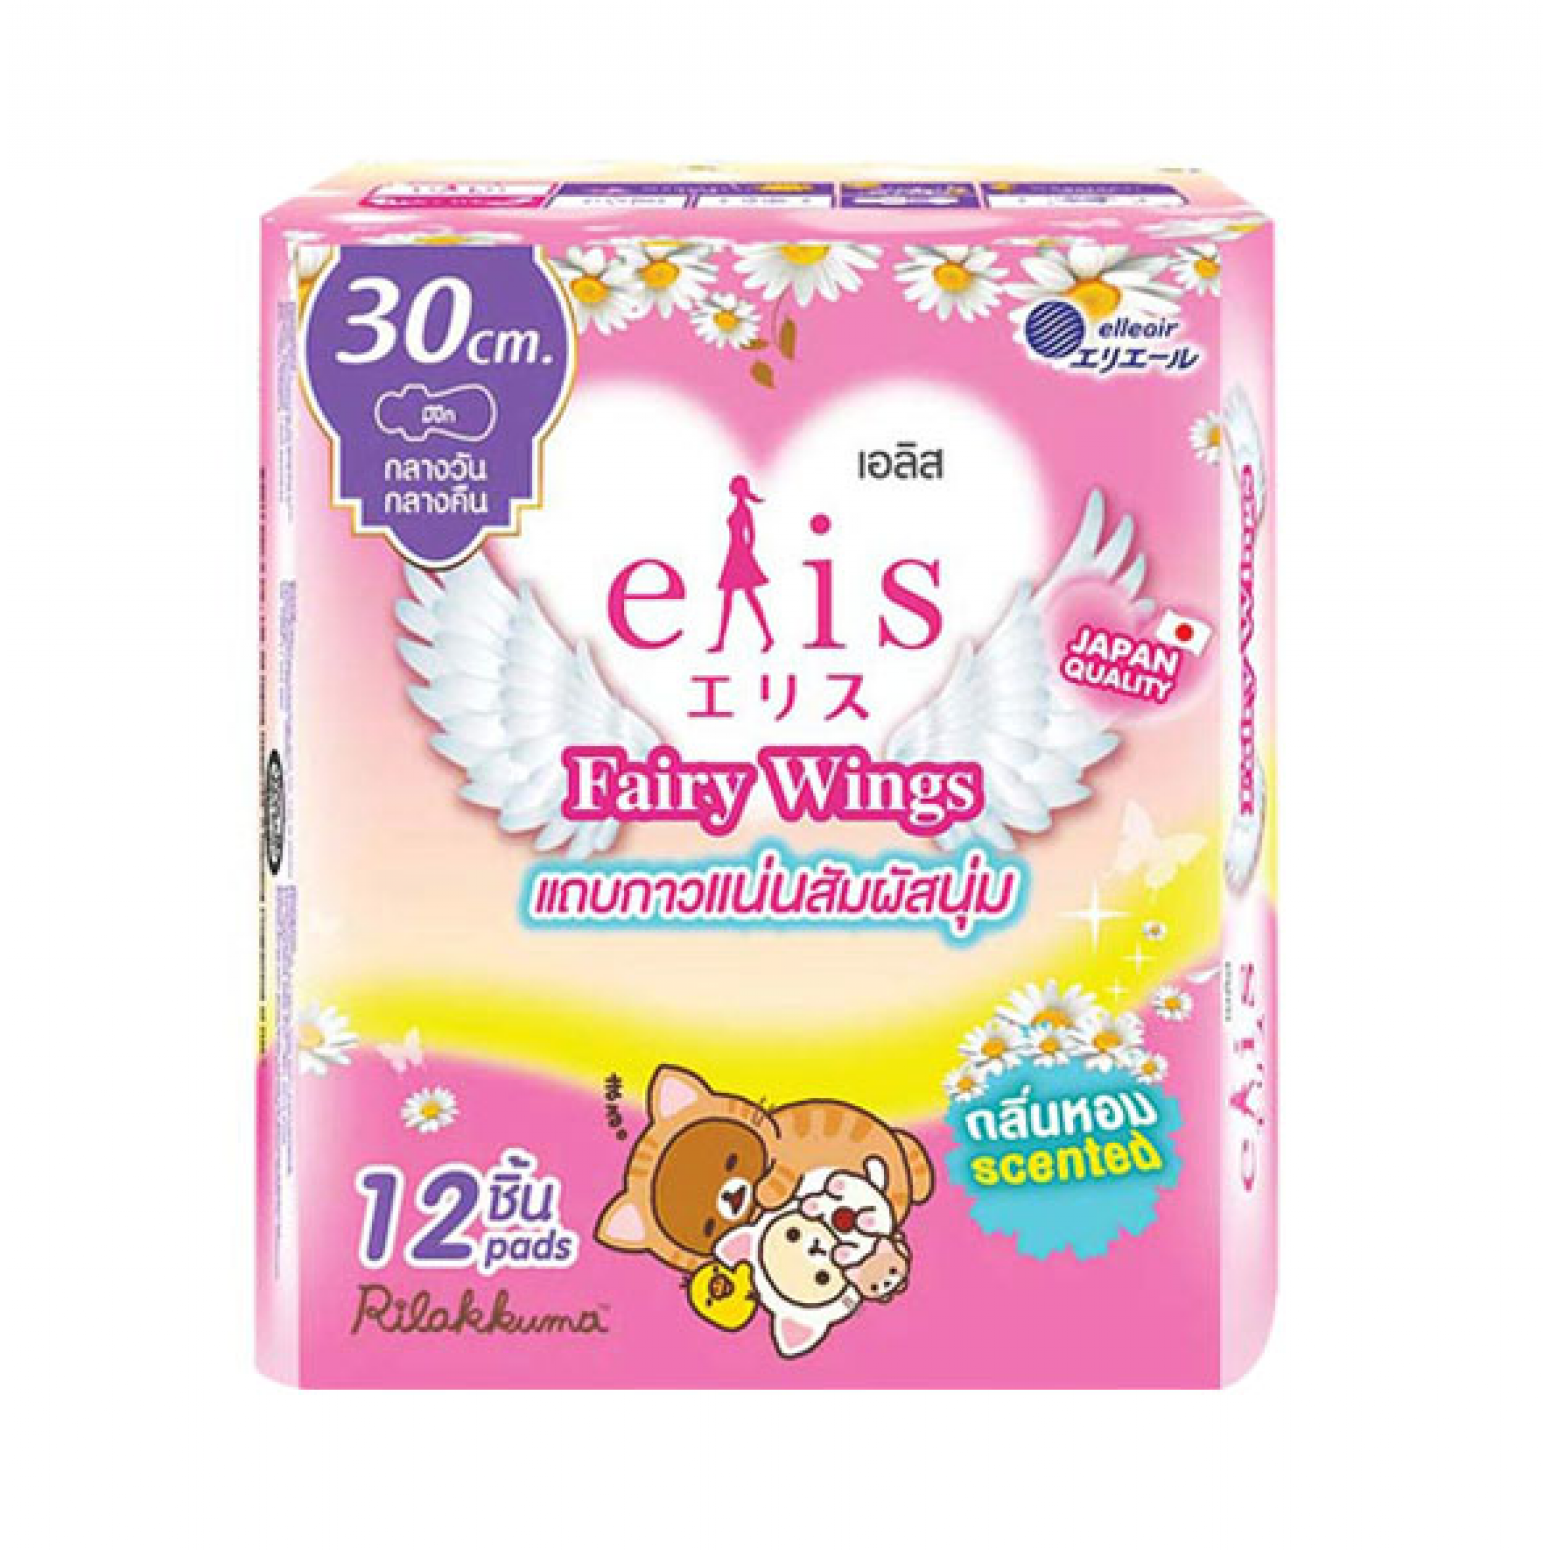 Elis Fairy Wings Sanitary Napkin 30cm. 12pcs.